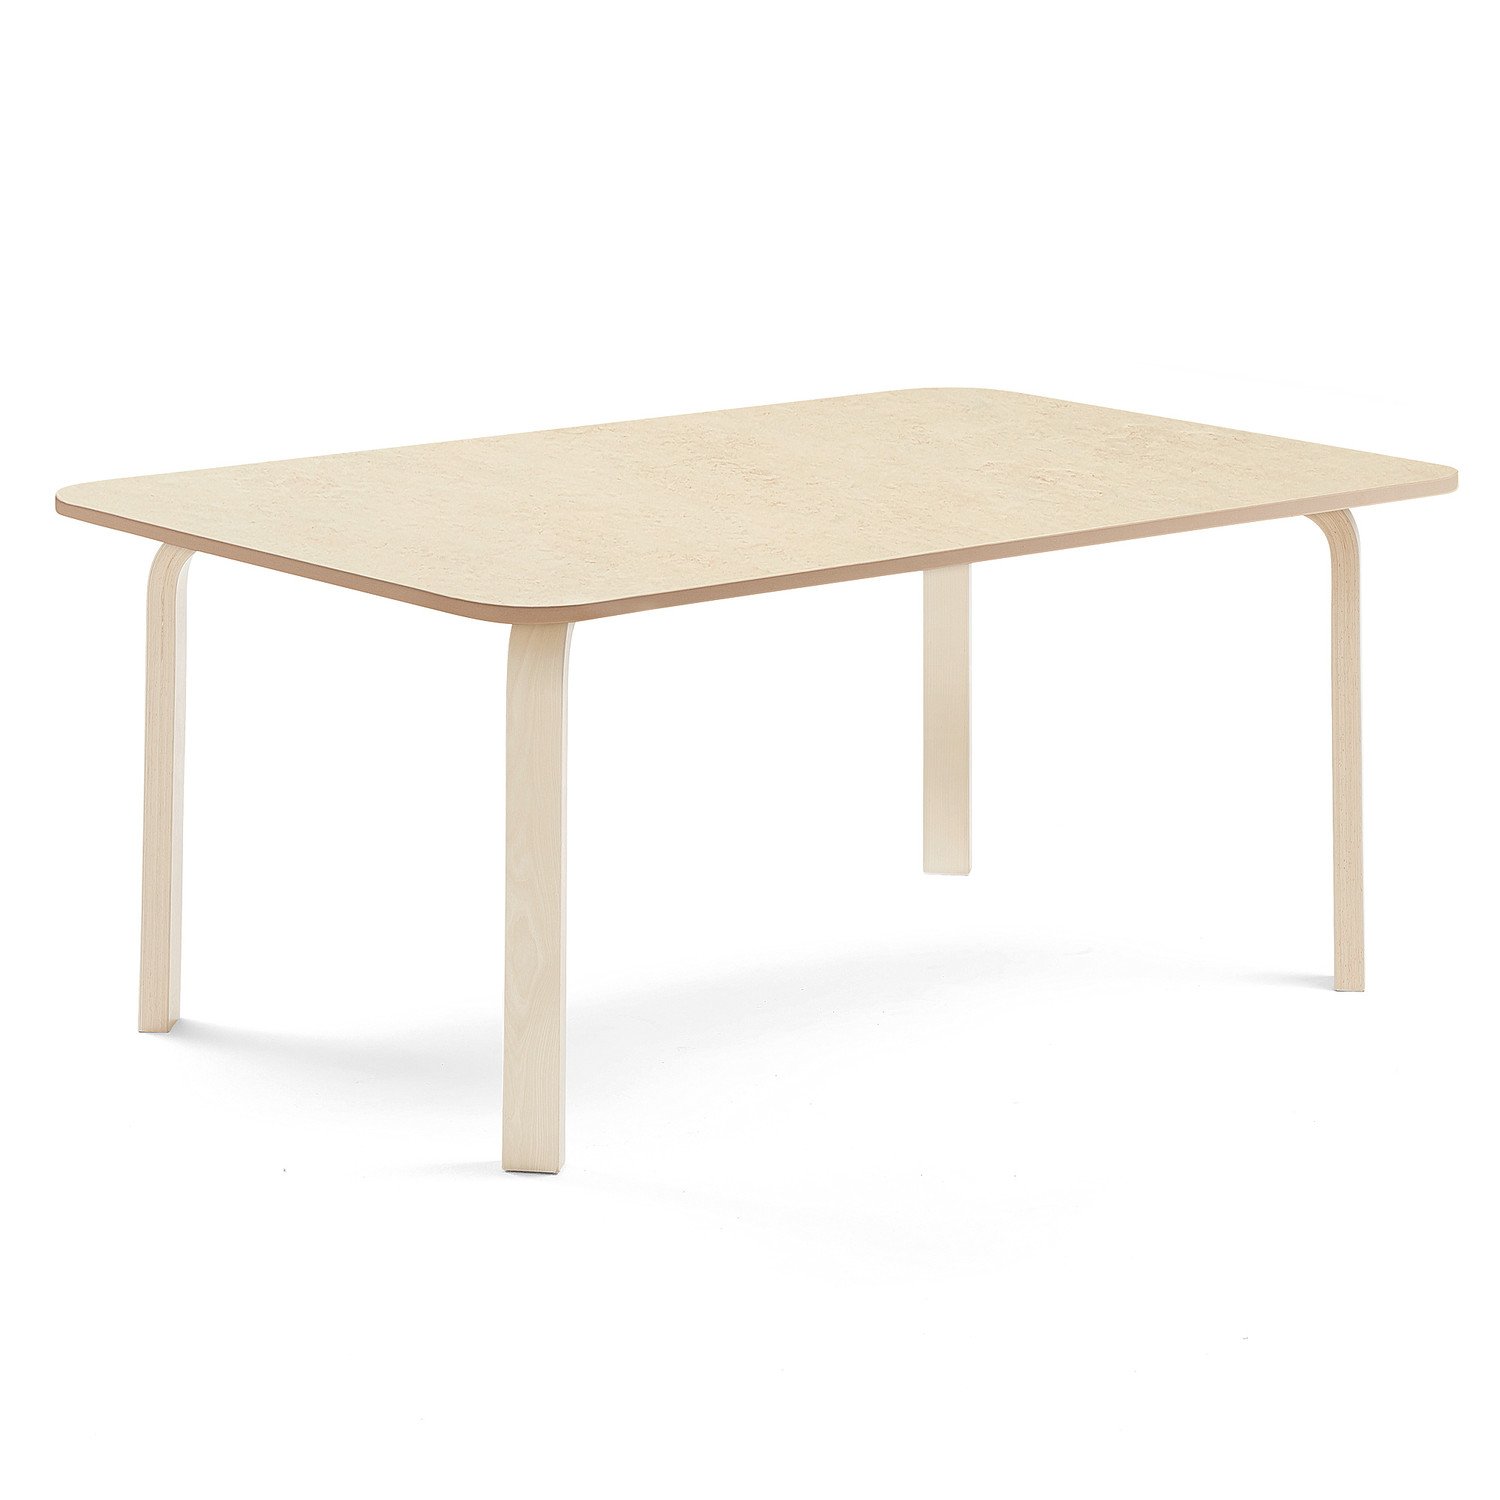 Stůl ELTON, 1800x800x590 mm, bříza, akustické linoleum, béžová